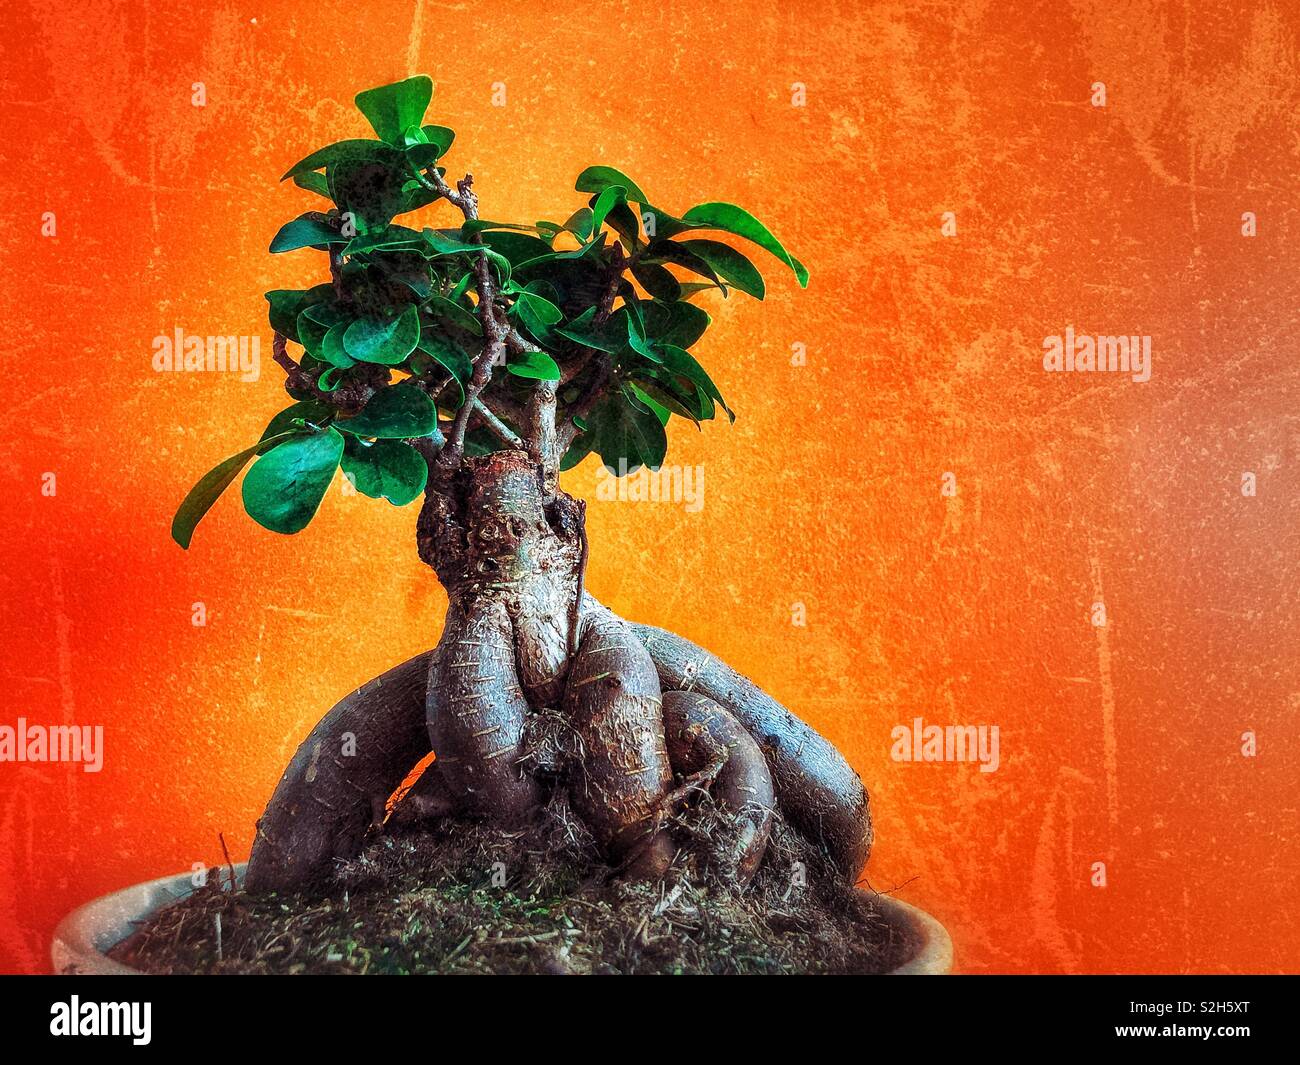 Bonsai tree (ginseng ficus) in a pot Stock Photo